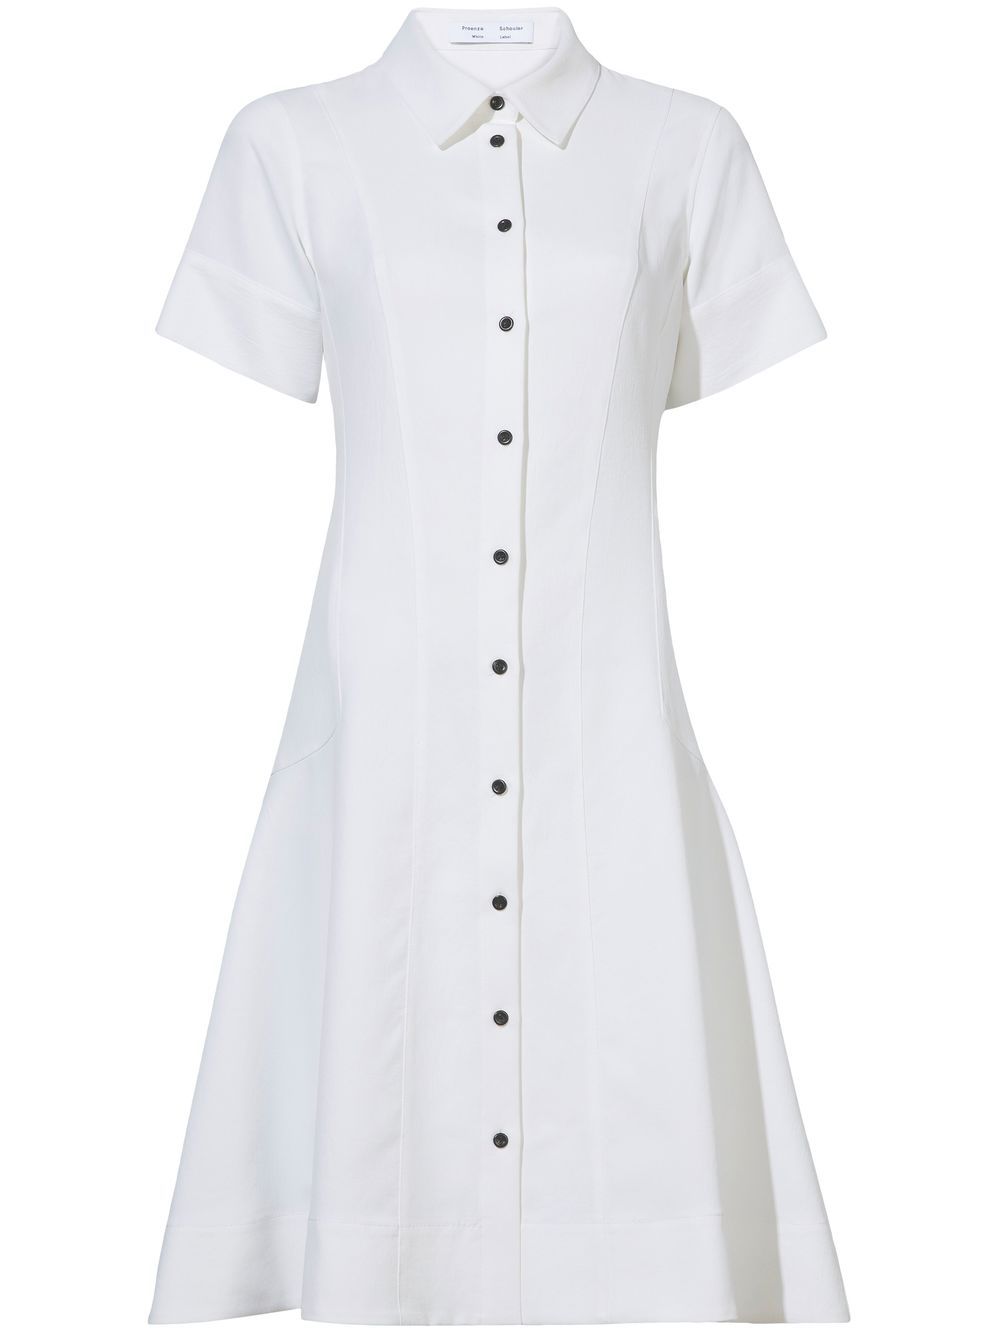 Proenza Schouler White Label short-sleeve shirt dress von Proenza Schouler White Label